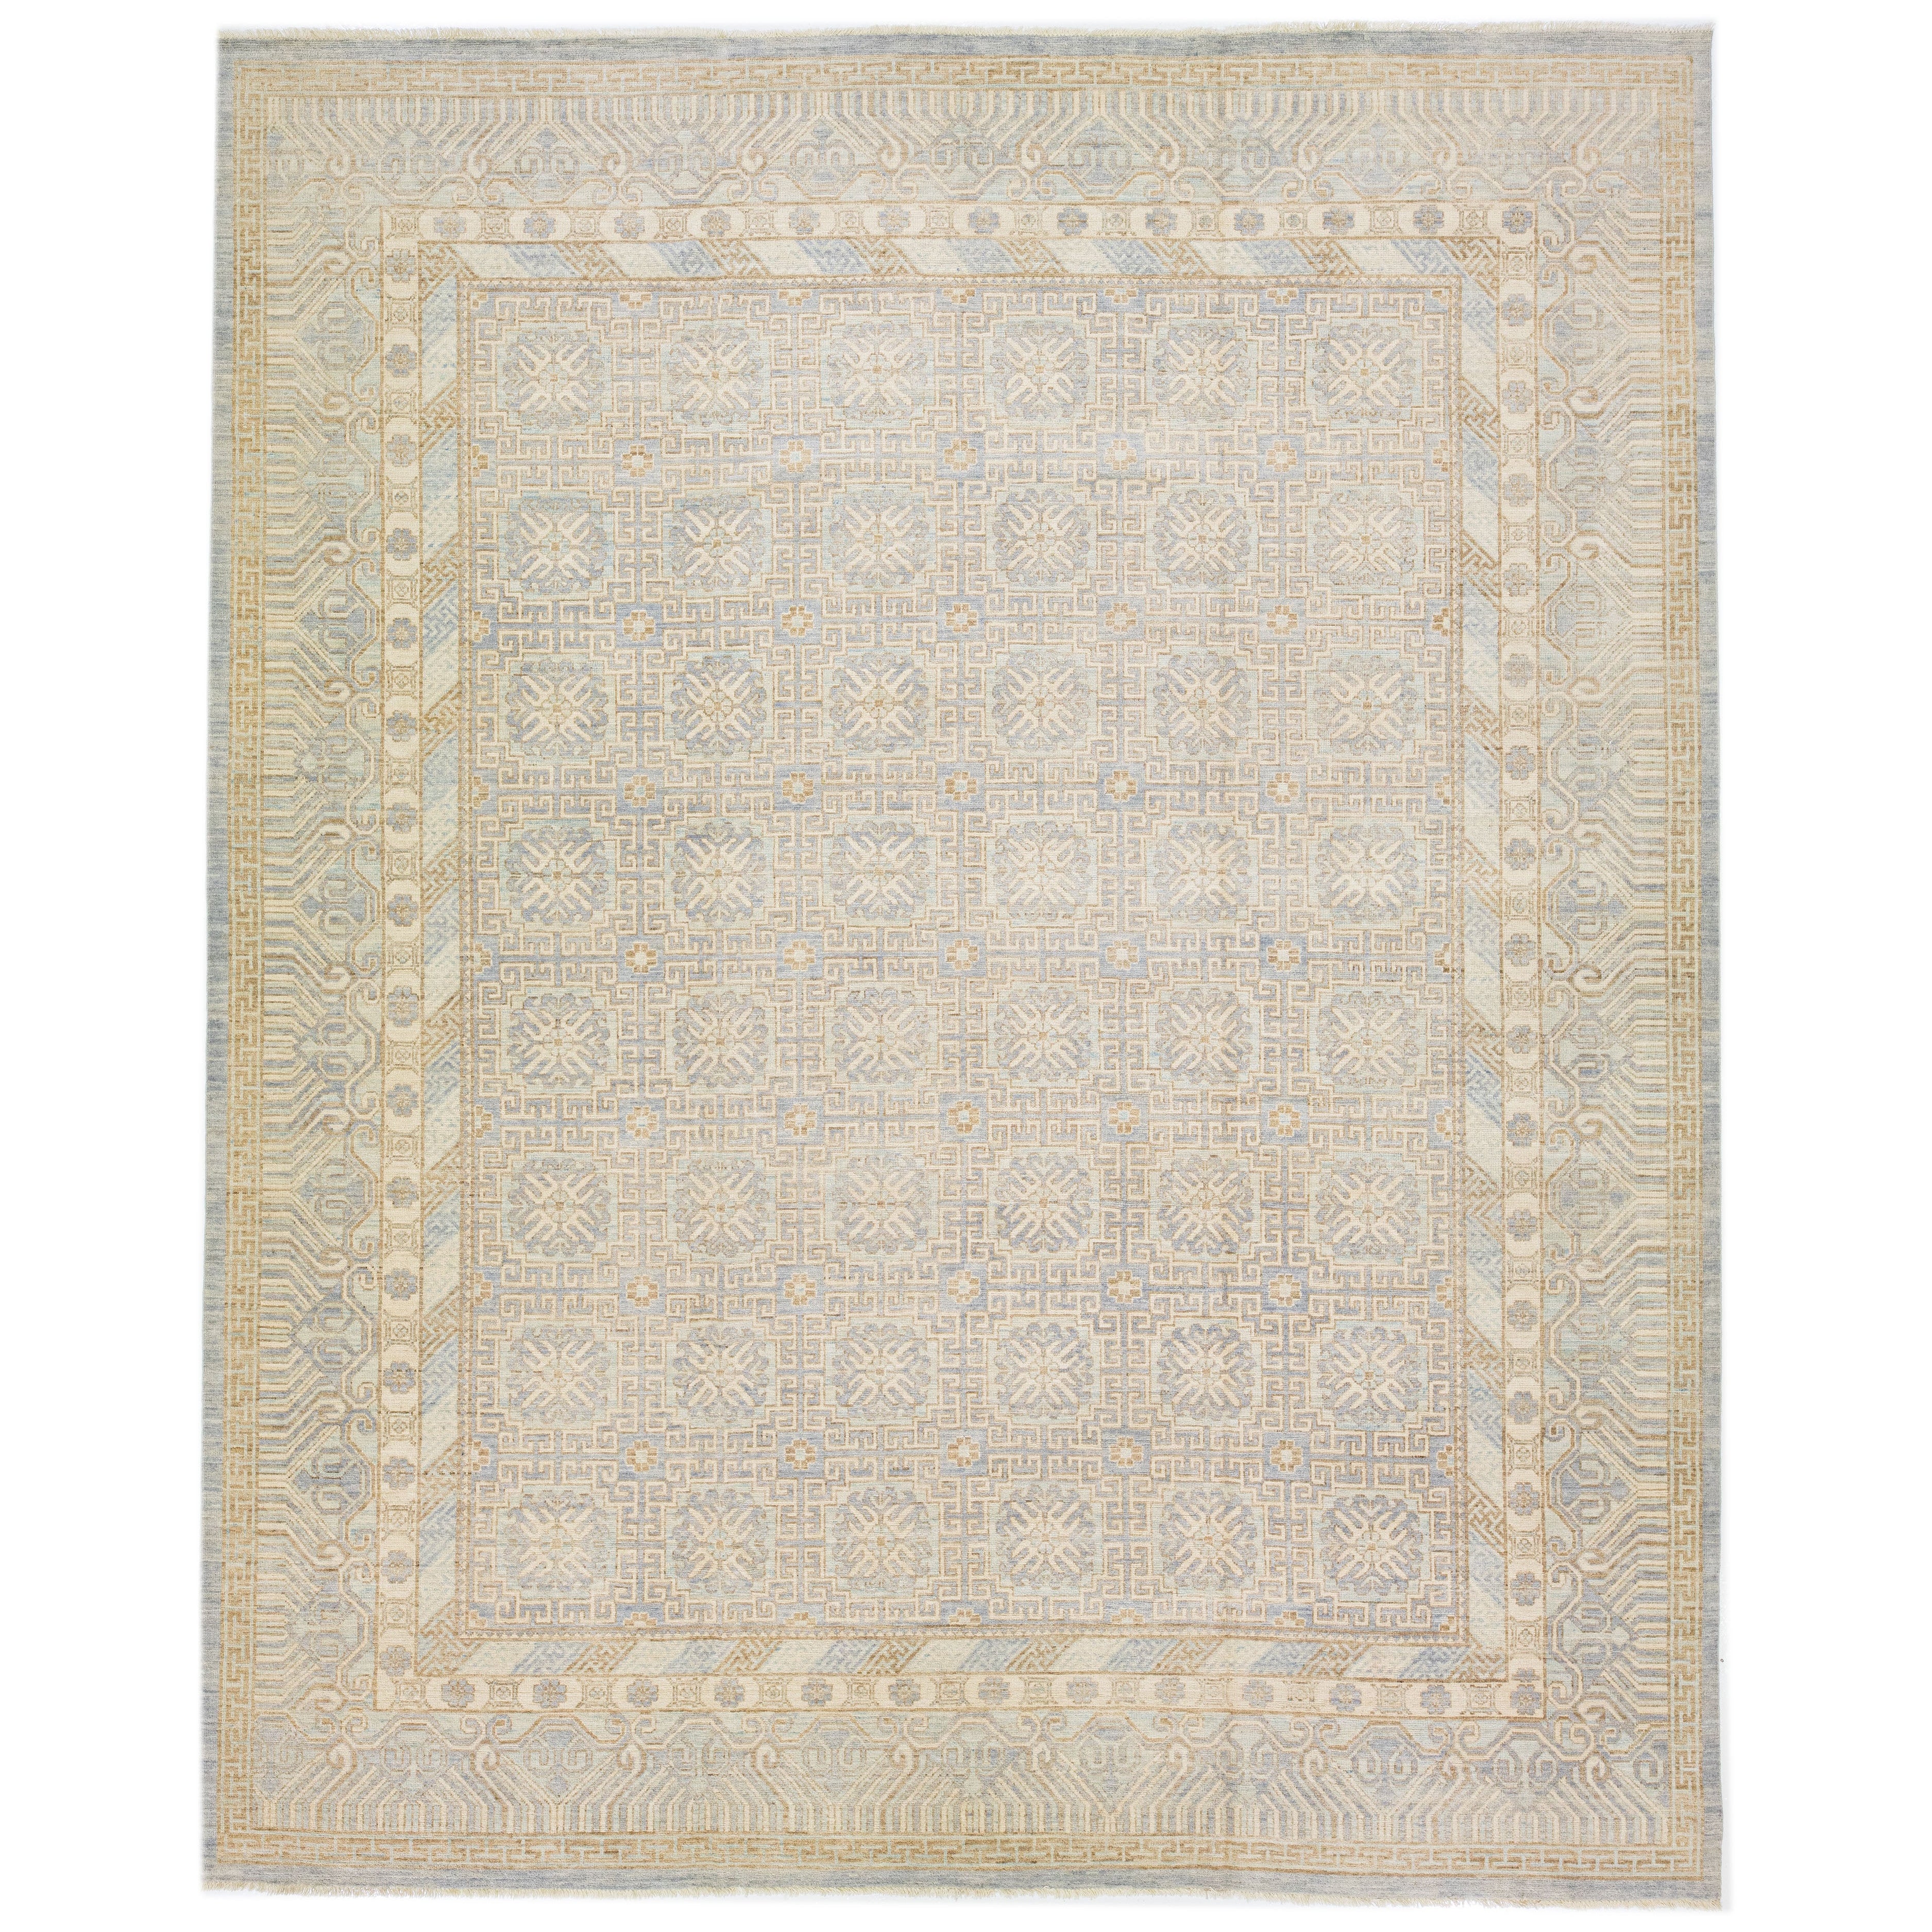 Oversize Modern Khotan Style Wool Rug with Geometric Pattern in Beige